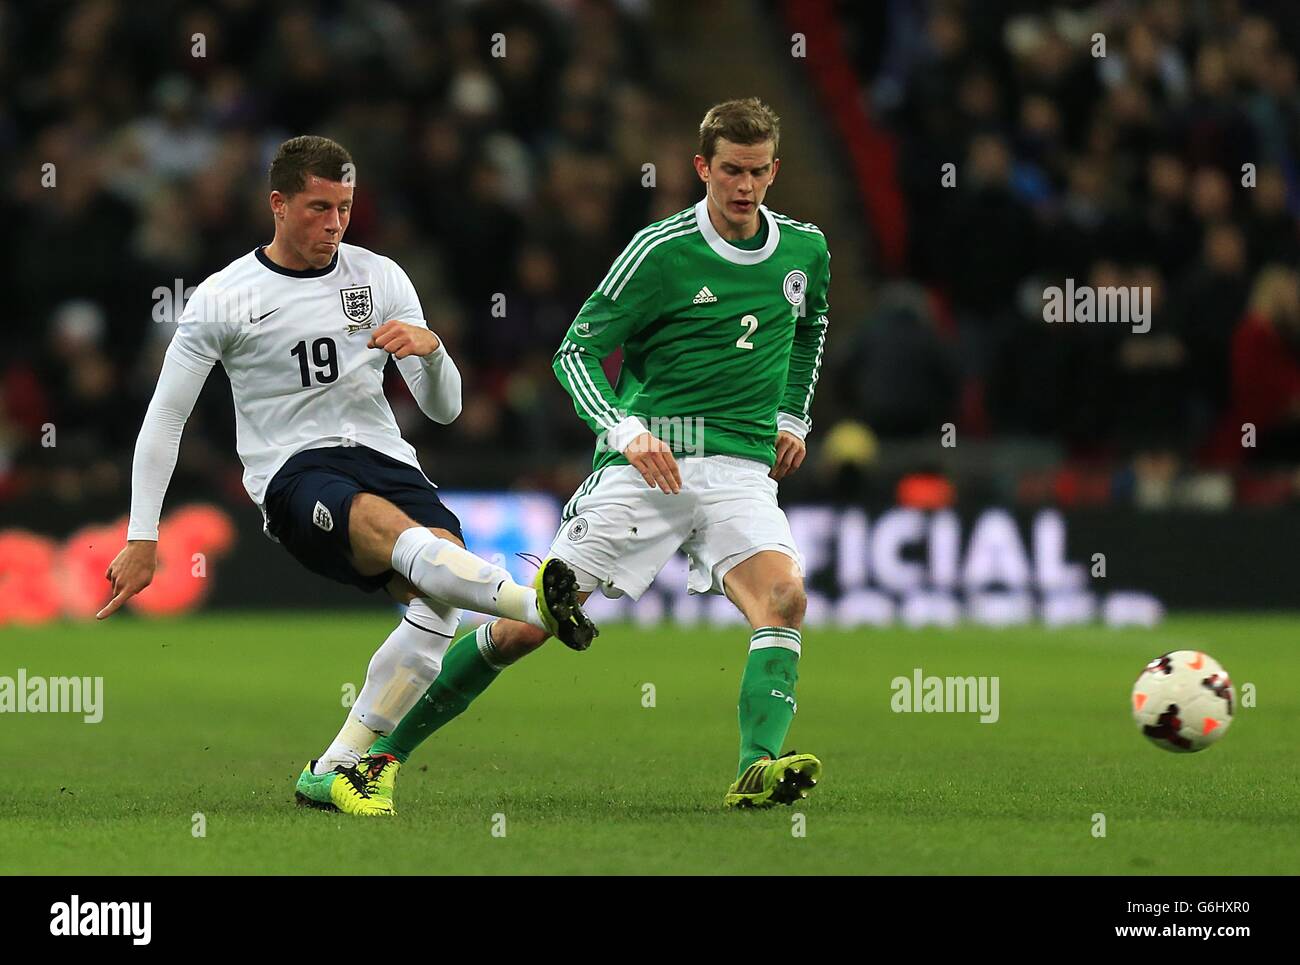 Soccer - International Friendly - England v Germany - Wembley Stadium. England's Ross Barkley (left) and Germany's Sven Bender in action Stock Photo